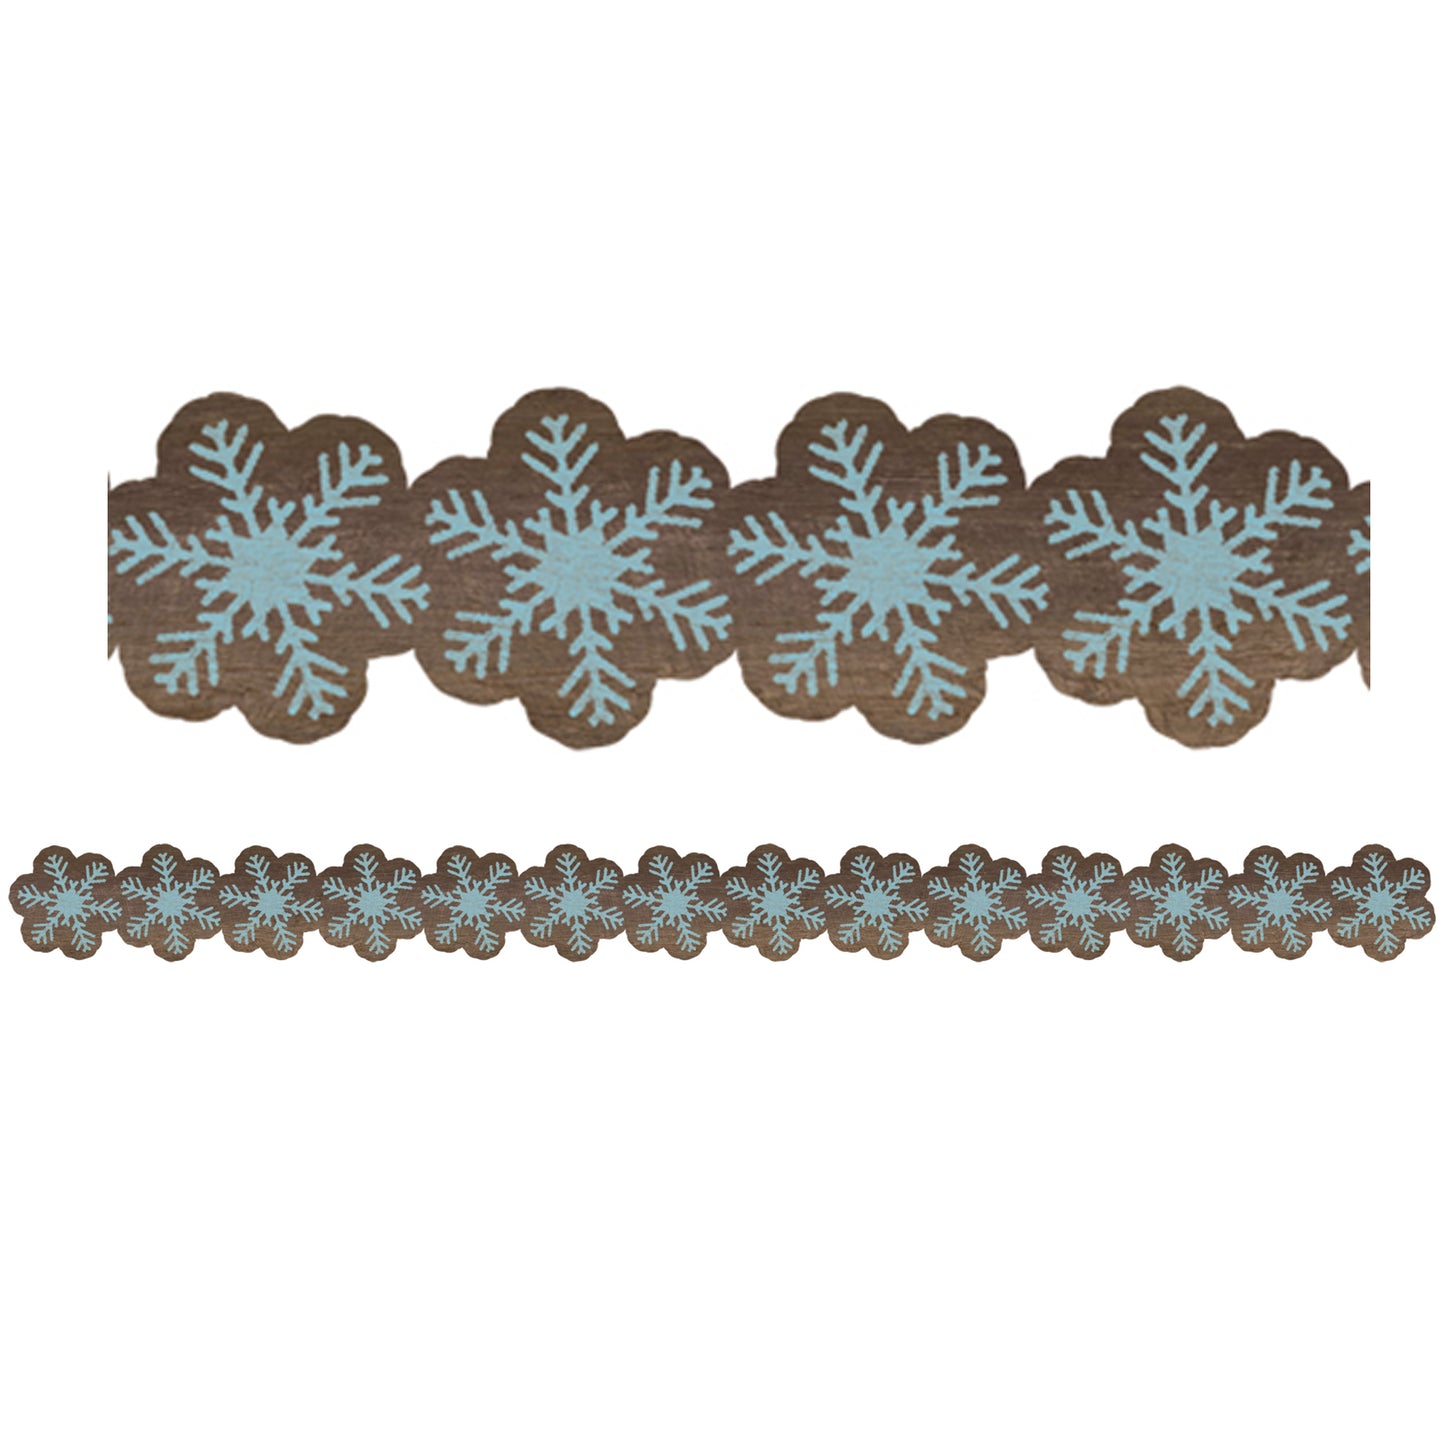 Home Sweet Classroom Snowflakes Die-Cut Border Trim, 35 Feet Per Pack, 6 Packs